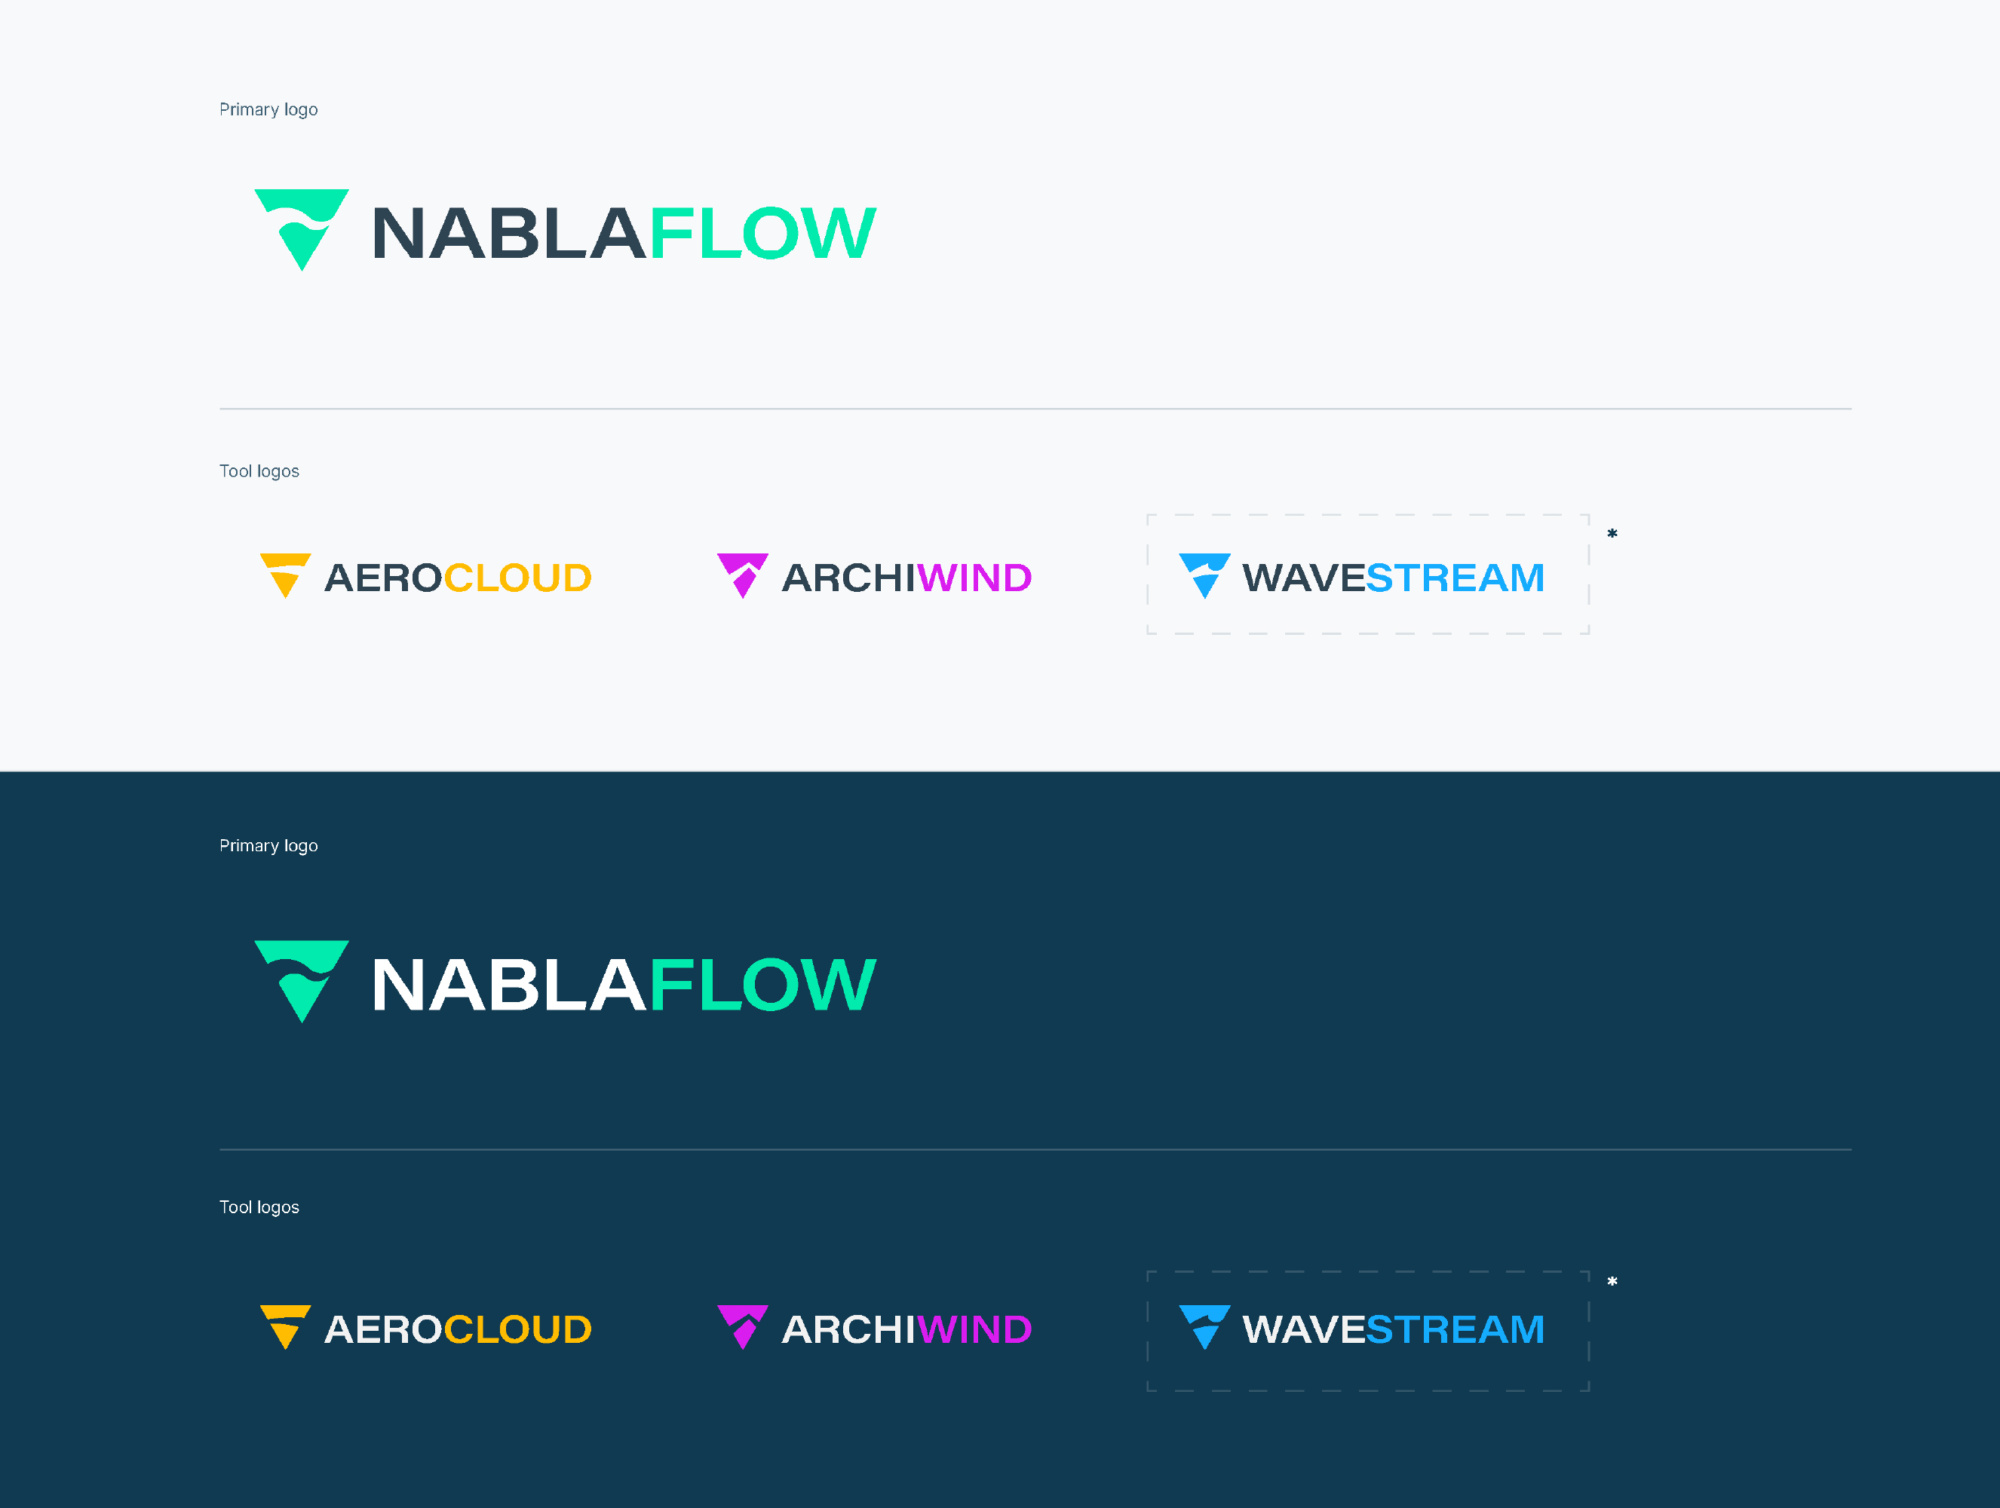 Logohierarki over NablaFlow logo. Logodesign, merkevarebygging, kommunikasjonsstrategi, konseptutvikling, profilmanual, rådgivning.